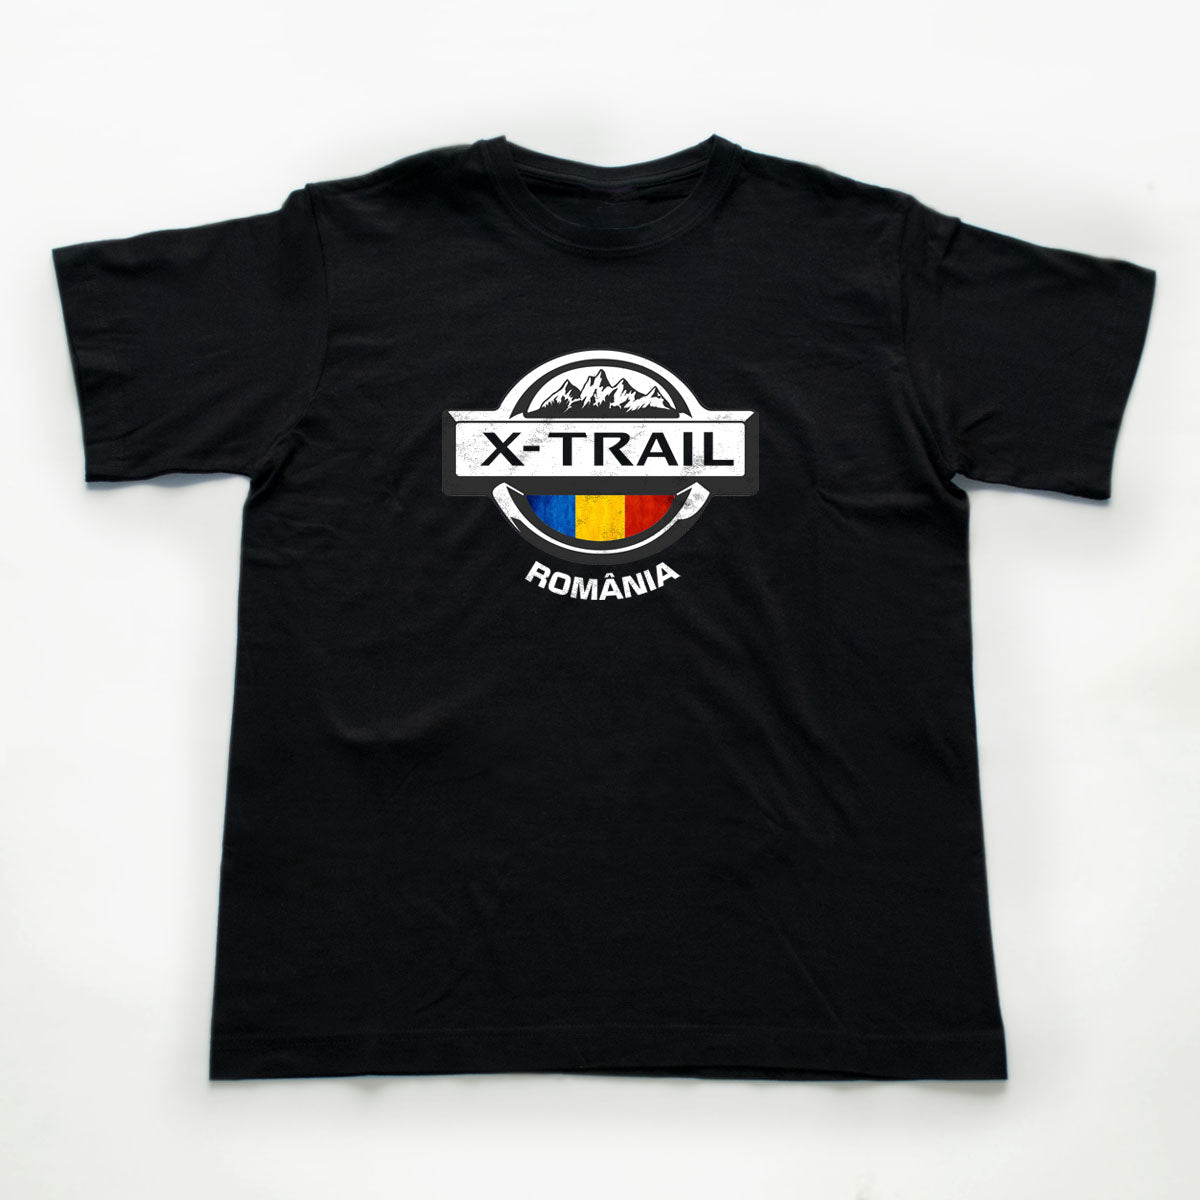 Tricouri X-Trail cu logo mare